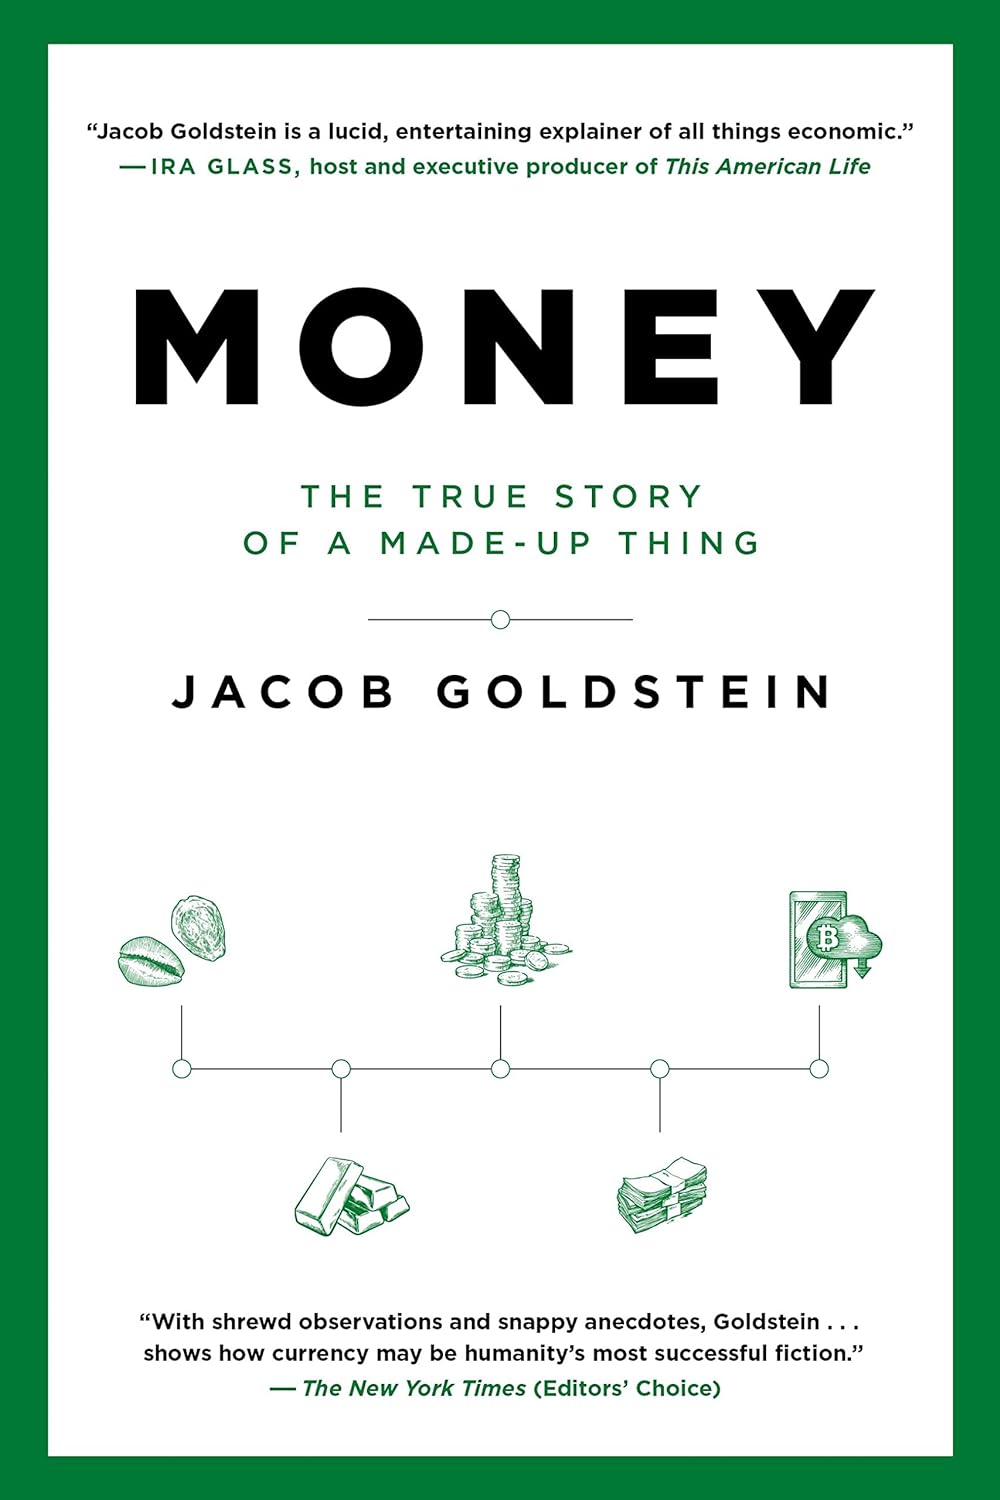 Book cover: "Money."